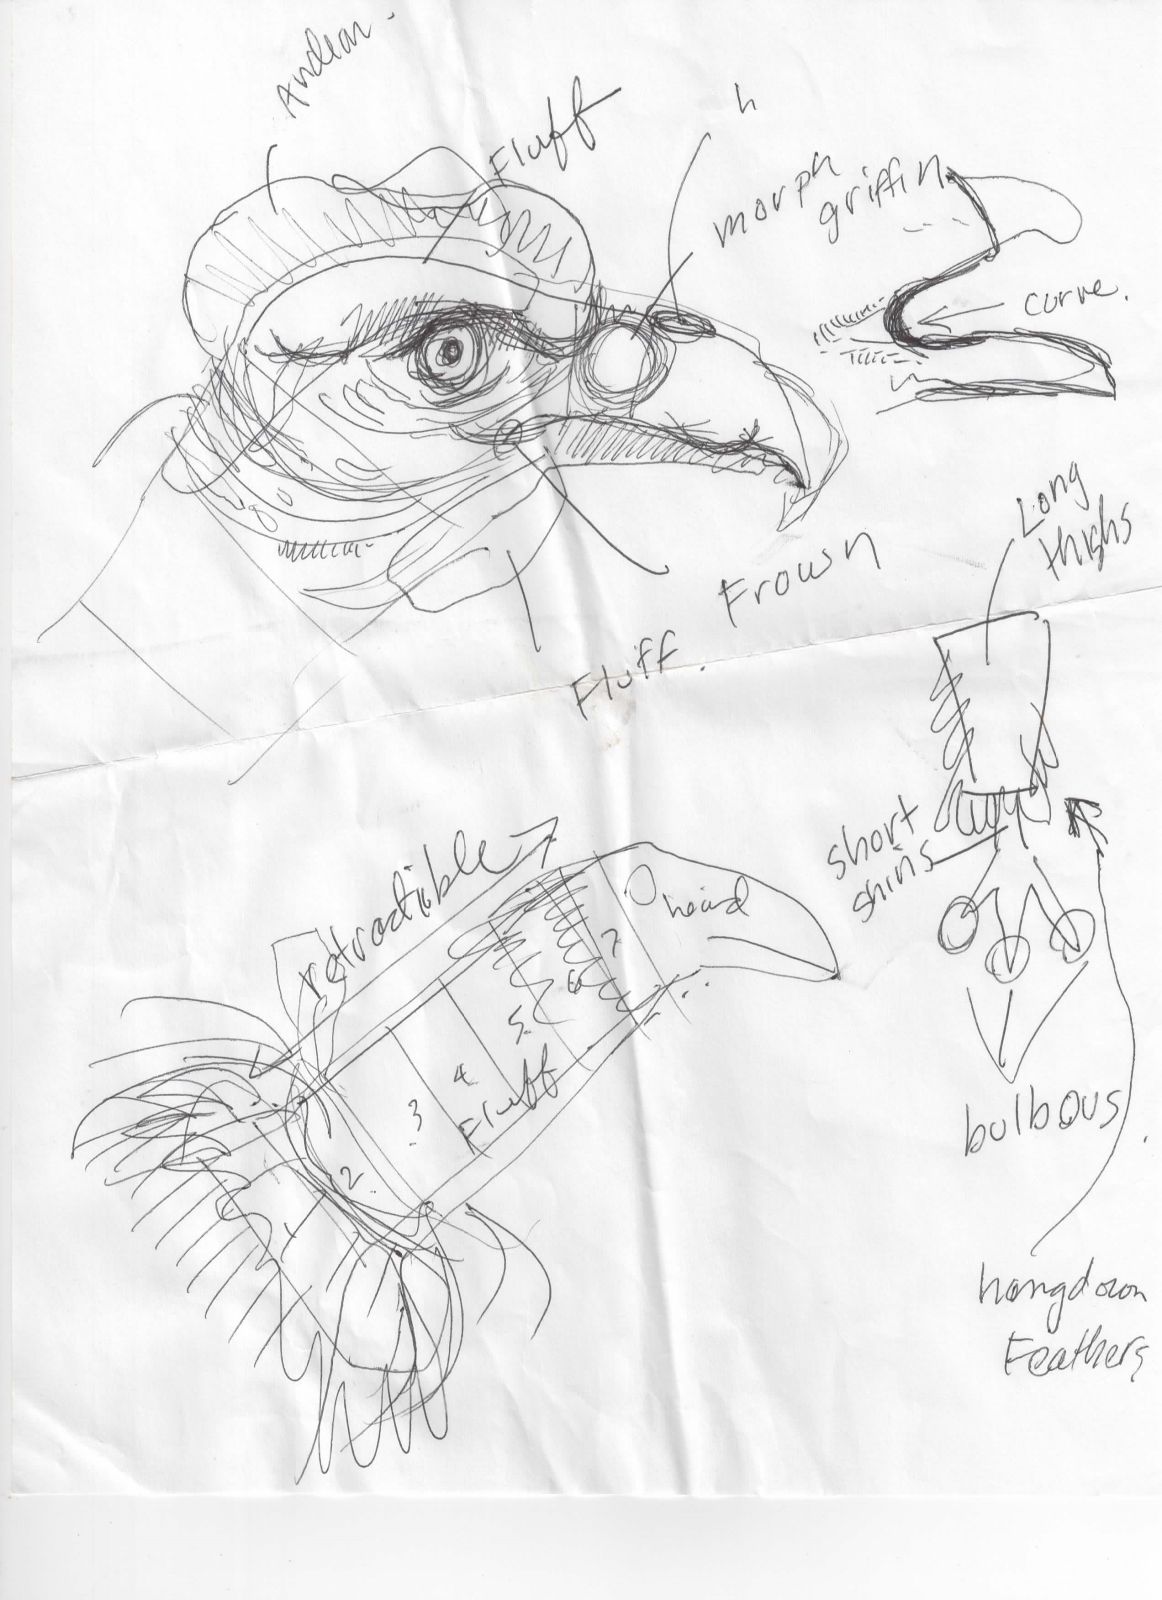 Vulture model sketches ©2015 by Ken Gilliland